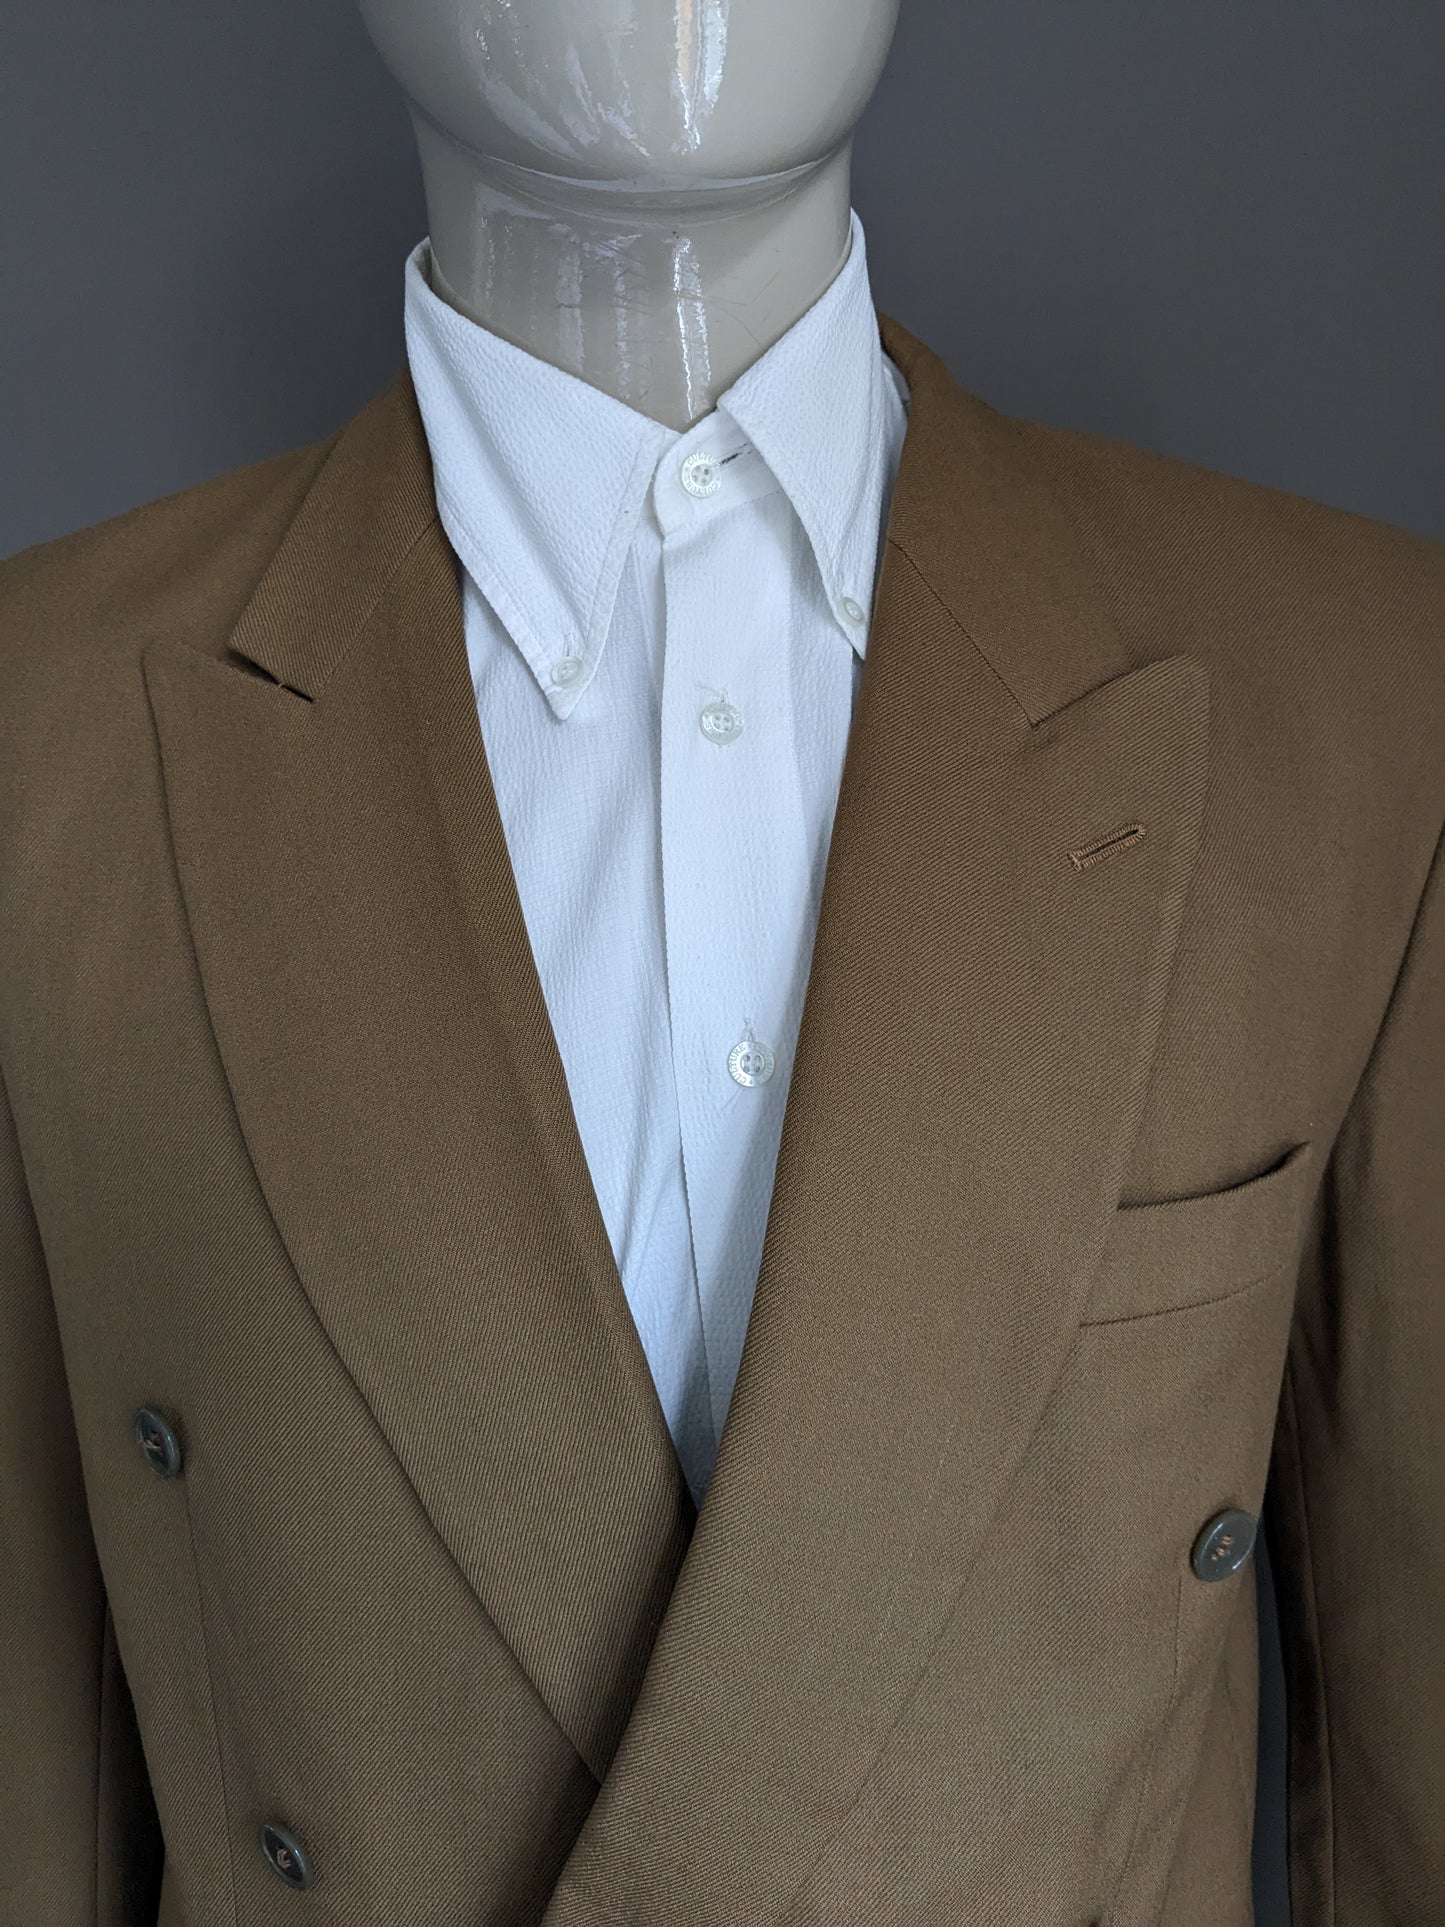 B Auswahl: Vintage Woolen Andrews & May Double Breasted Jacke. Hellbraun gefärbt. Größe 49 (m).